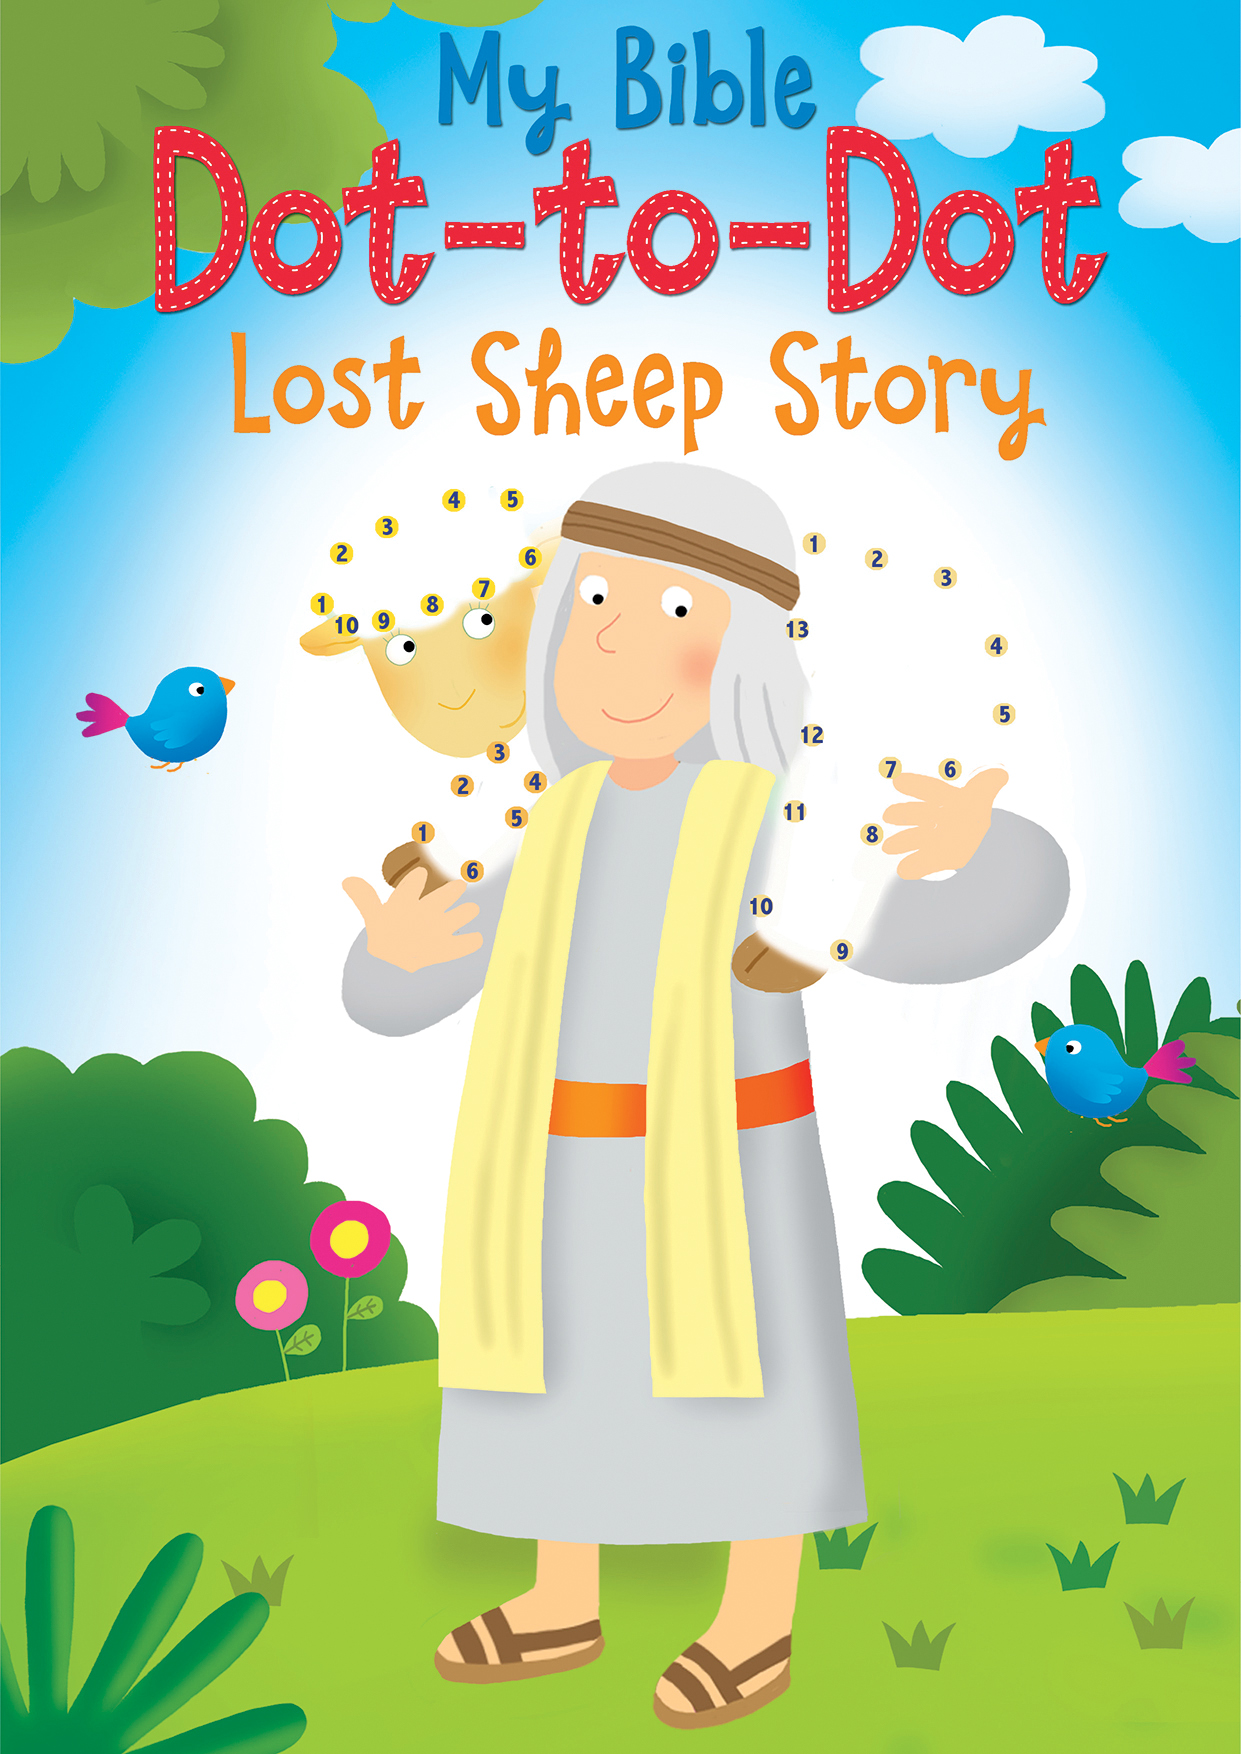 My Bible Dot-to-Dot Lost Sheep Story